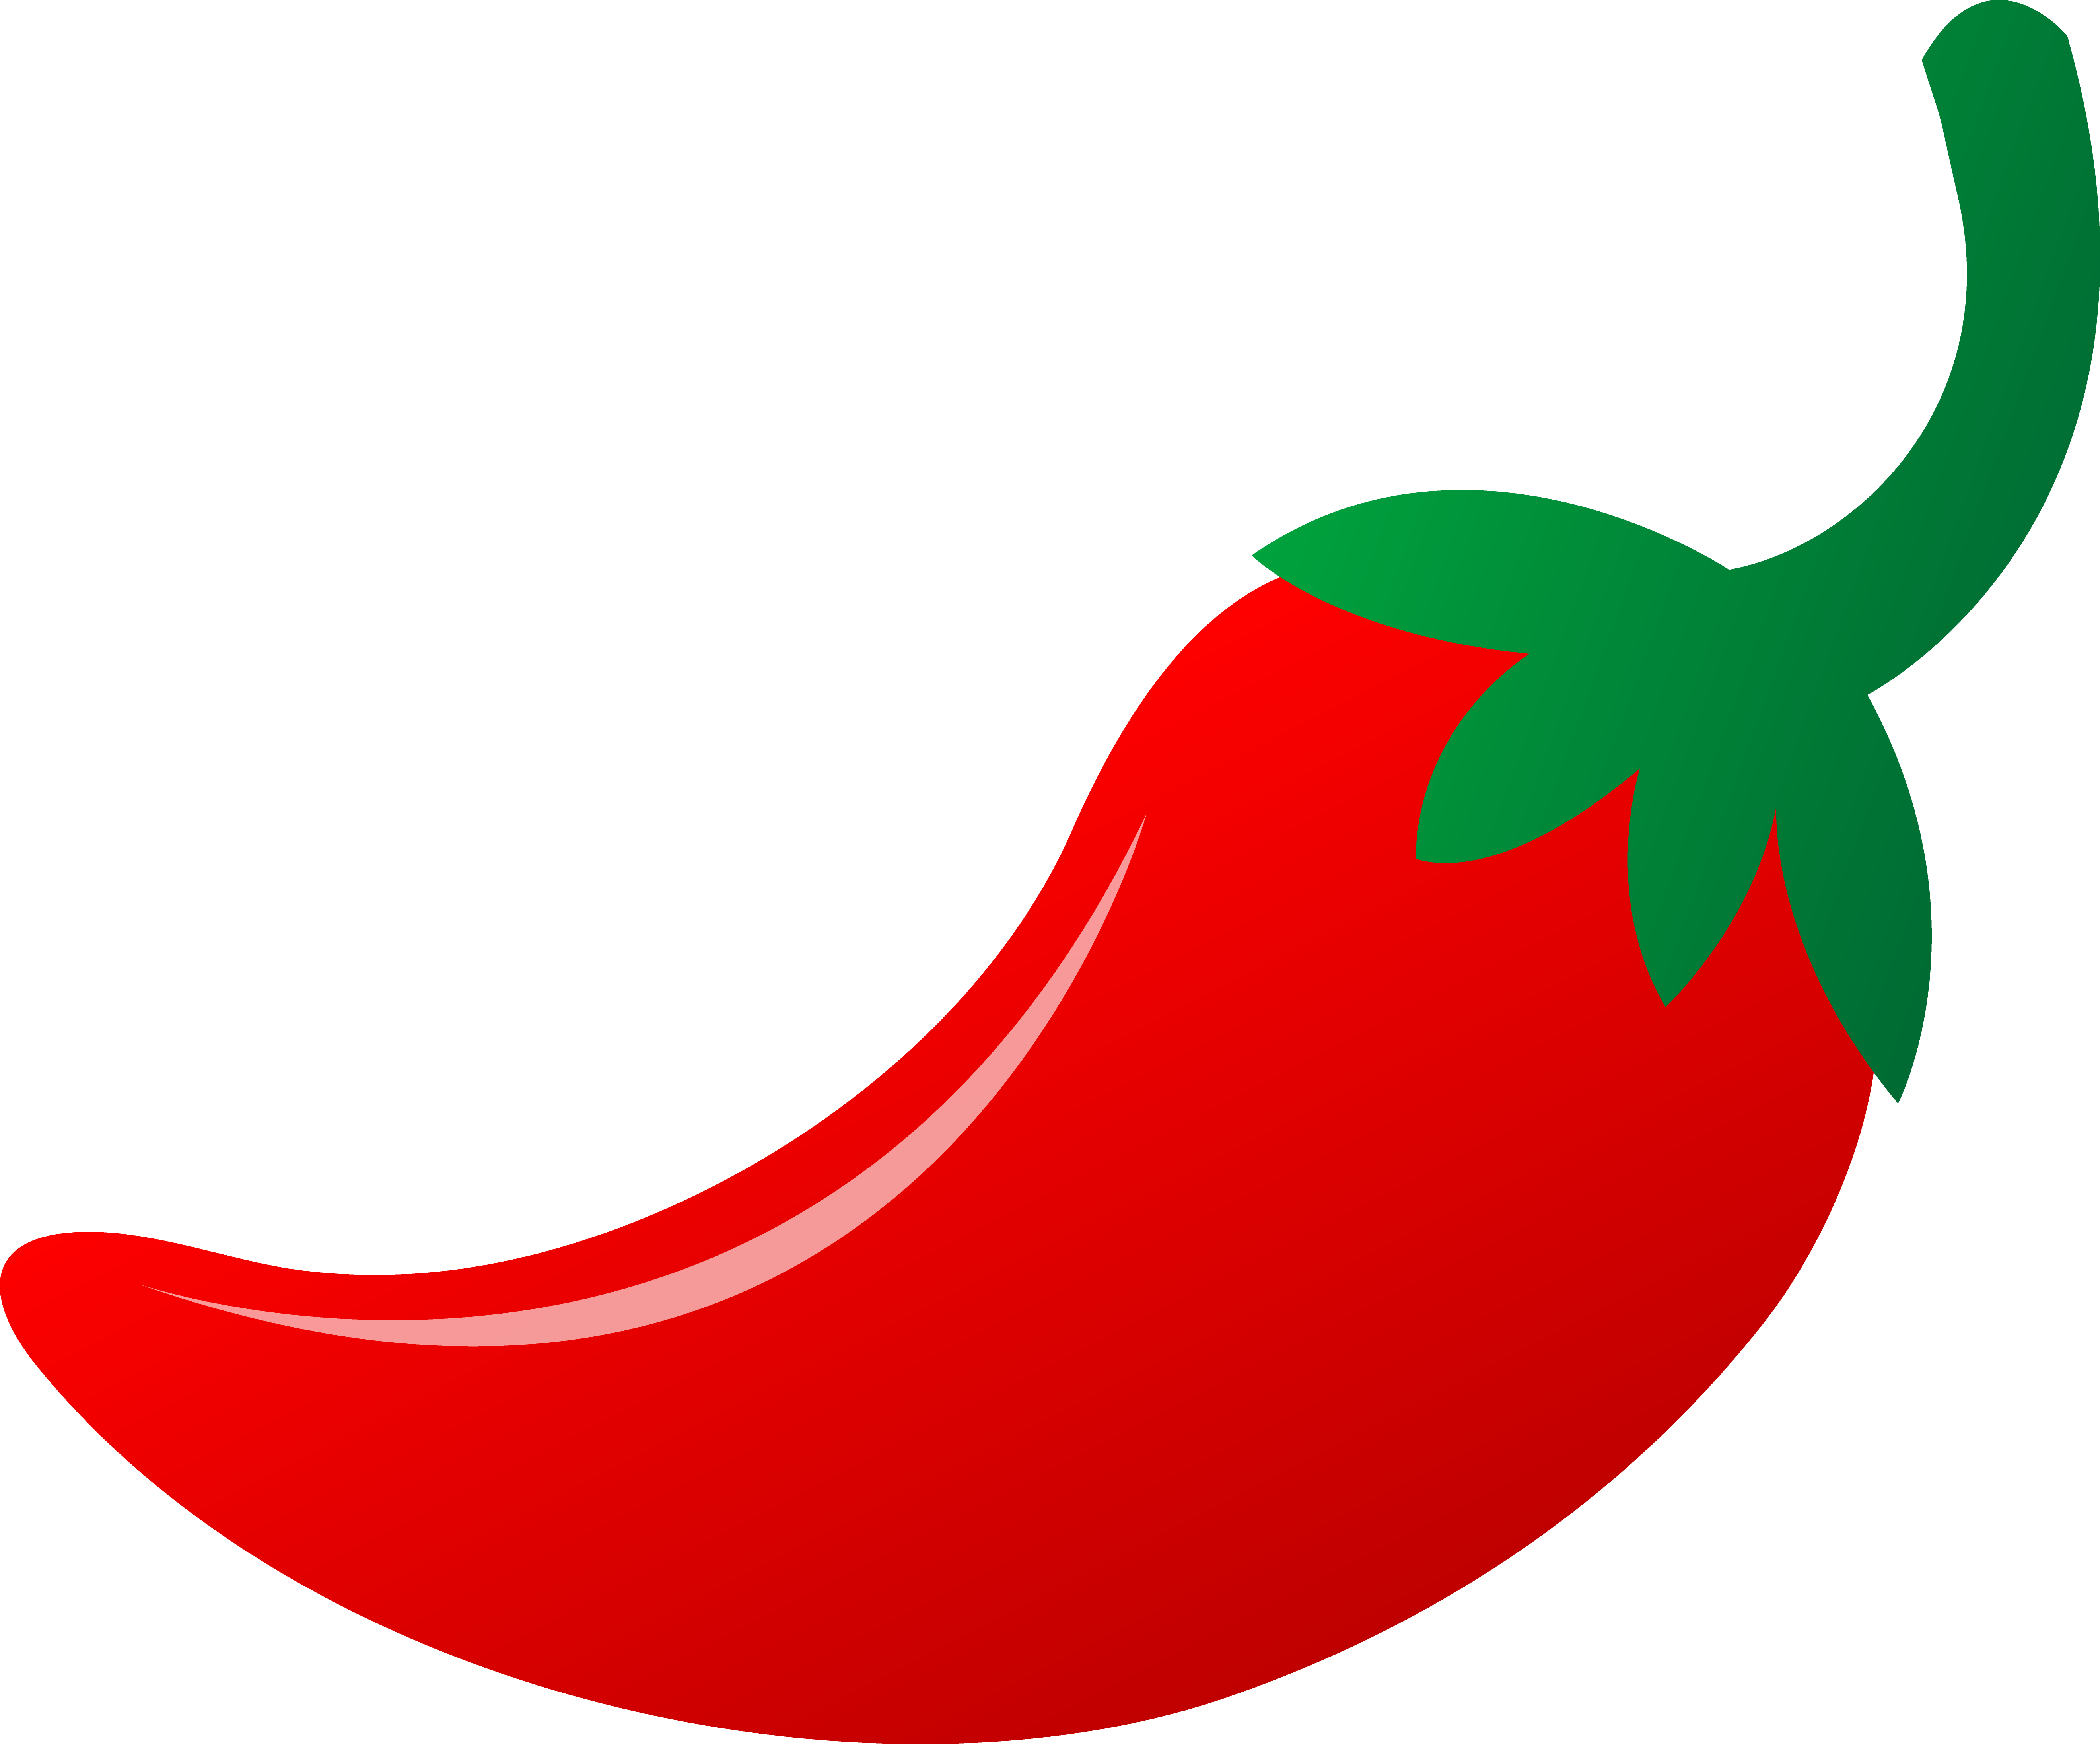 chili clipart hot pepper